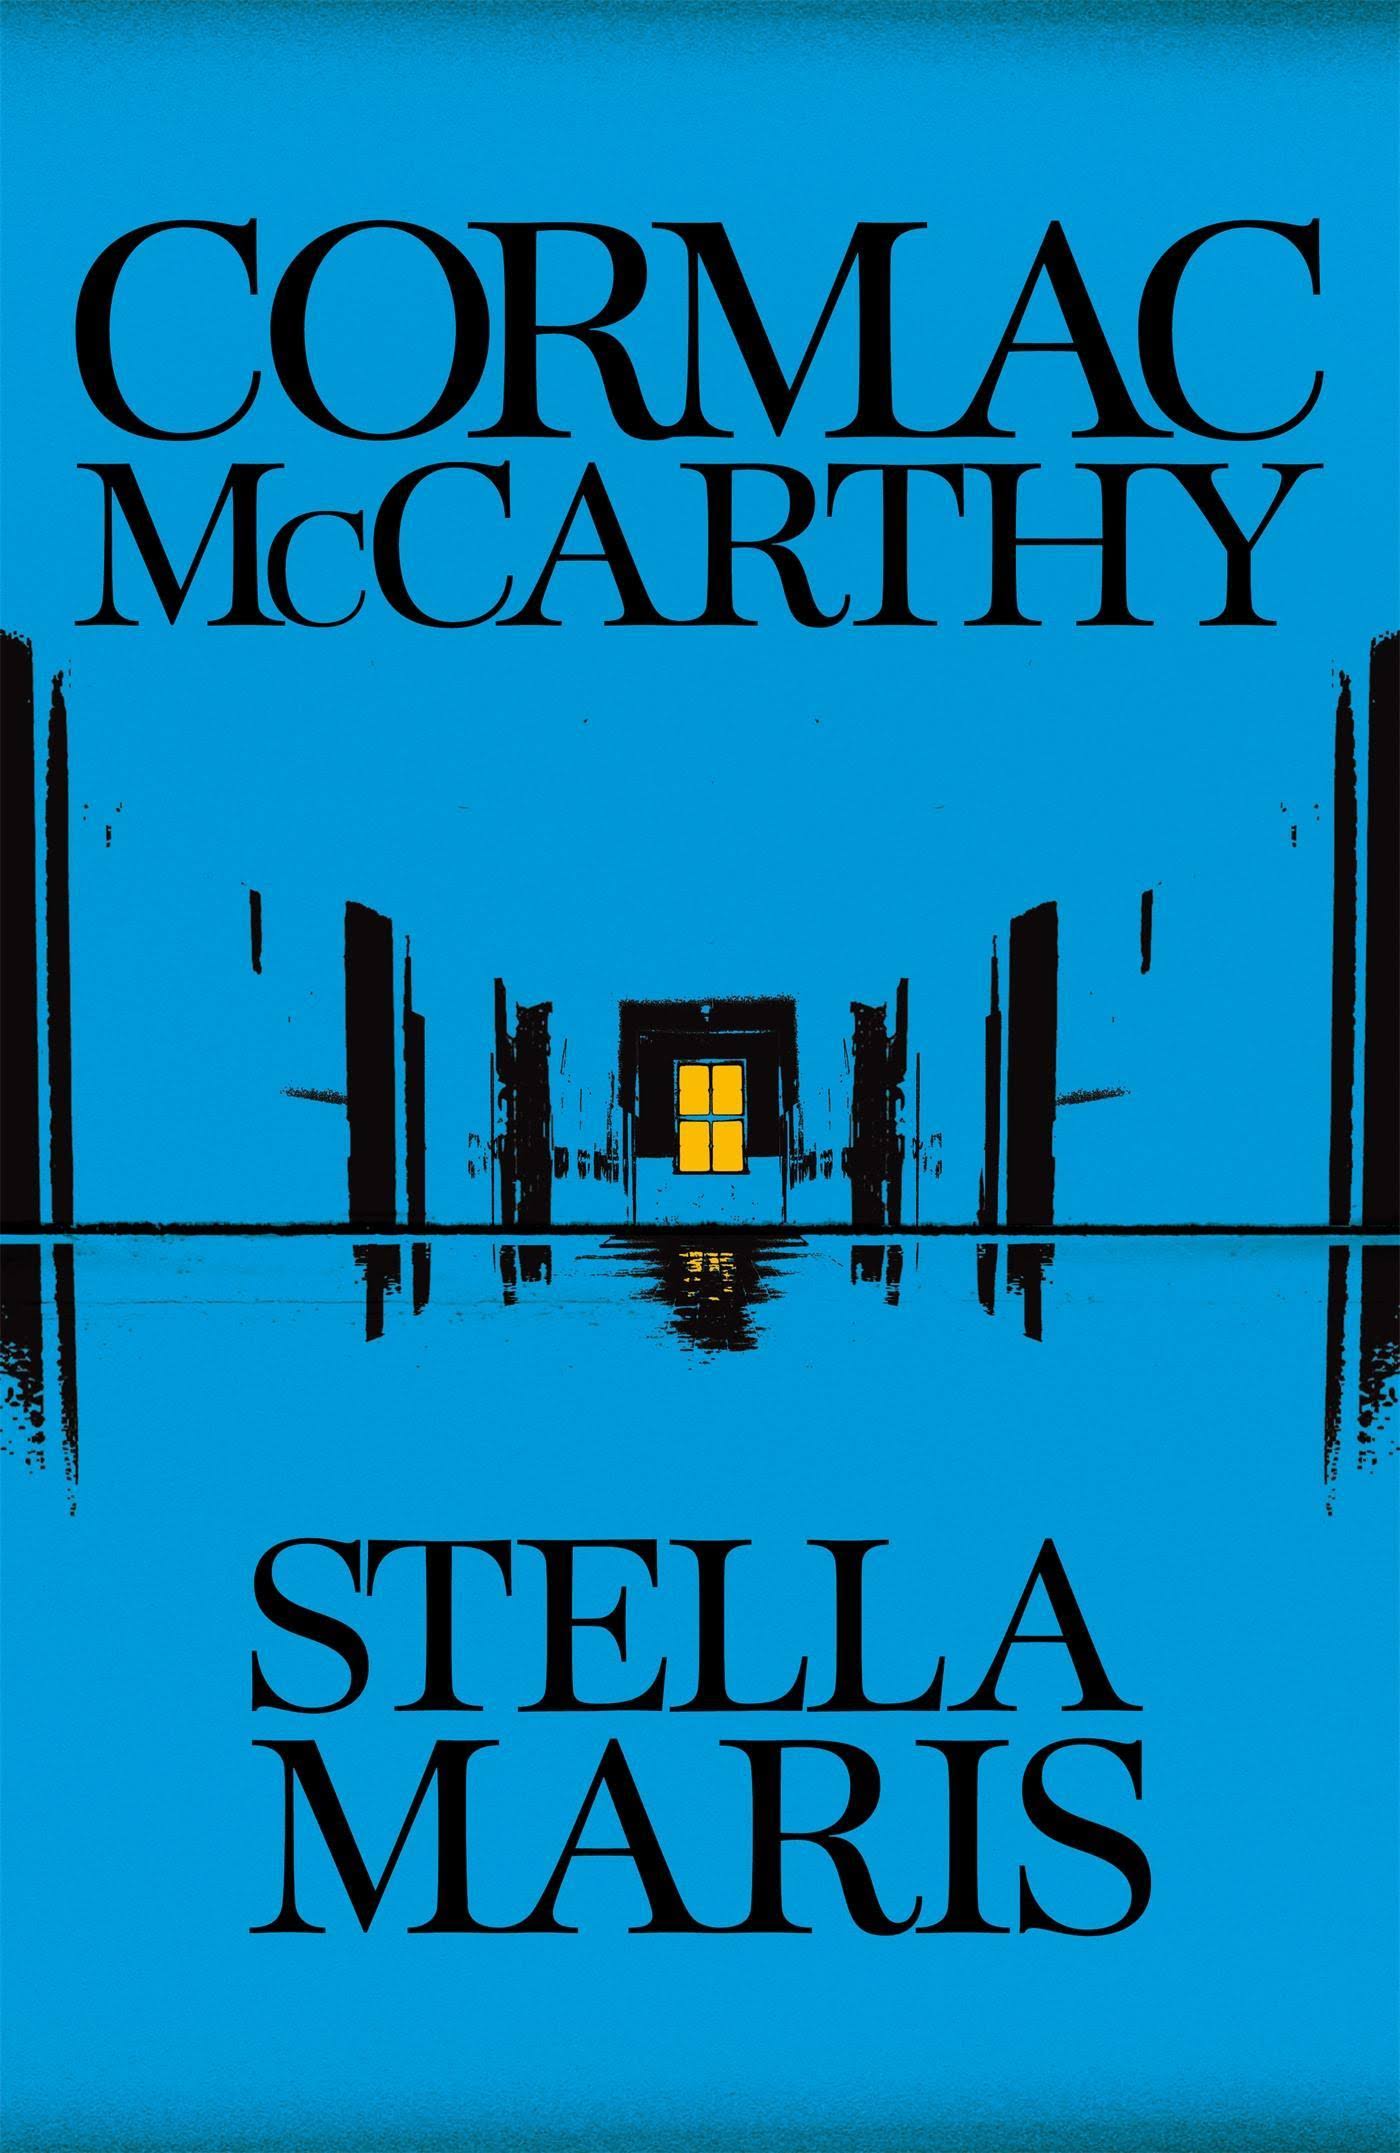 Stella Maris by Cormac McCarthy